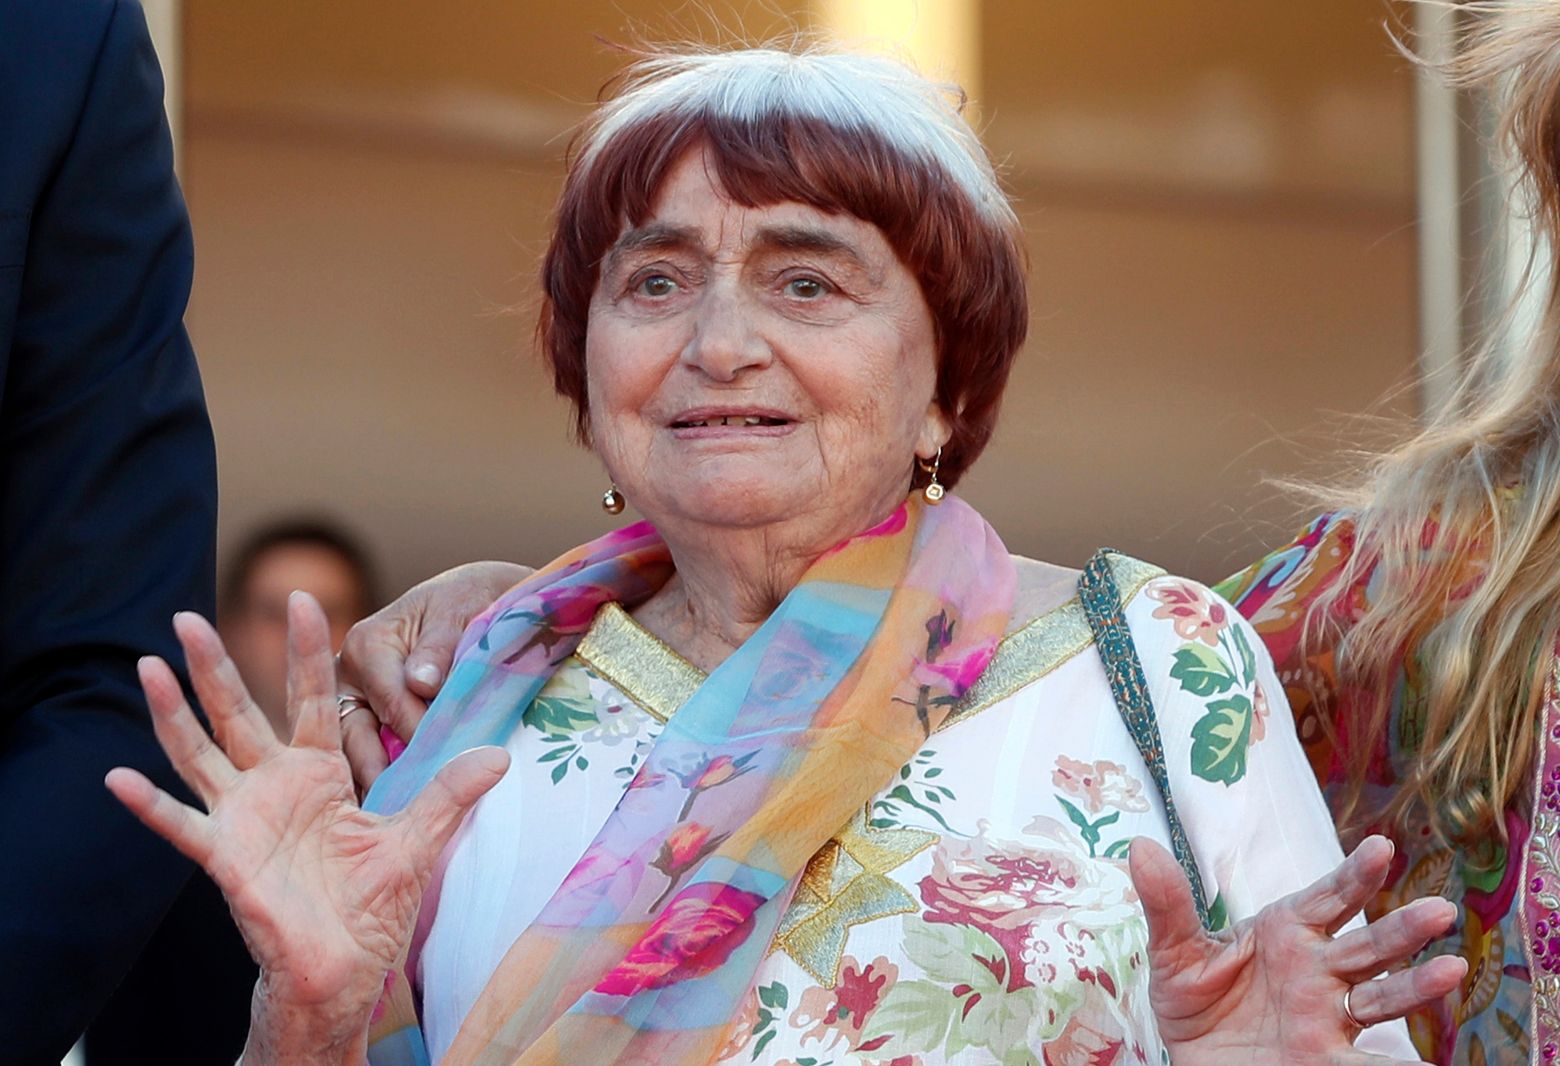 Agnes Varda, French New Wave pioneer, dies at 90